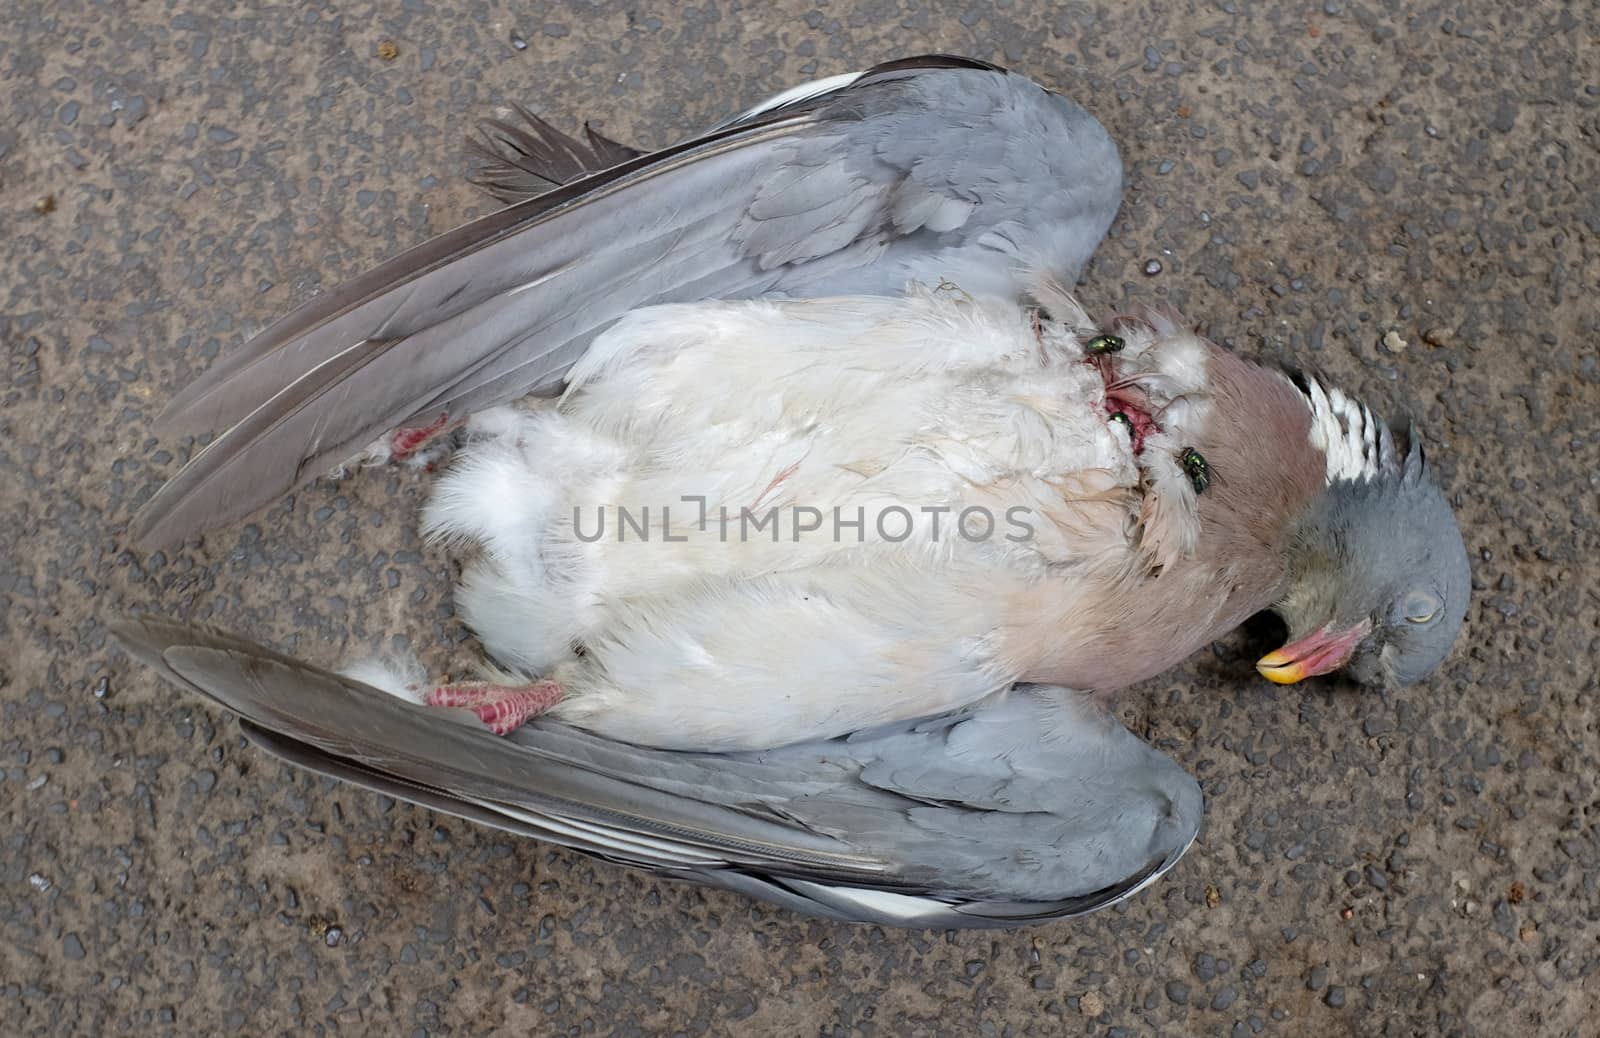 Blowflies begin to infest road kill - a dead wood pigeon